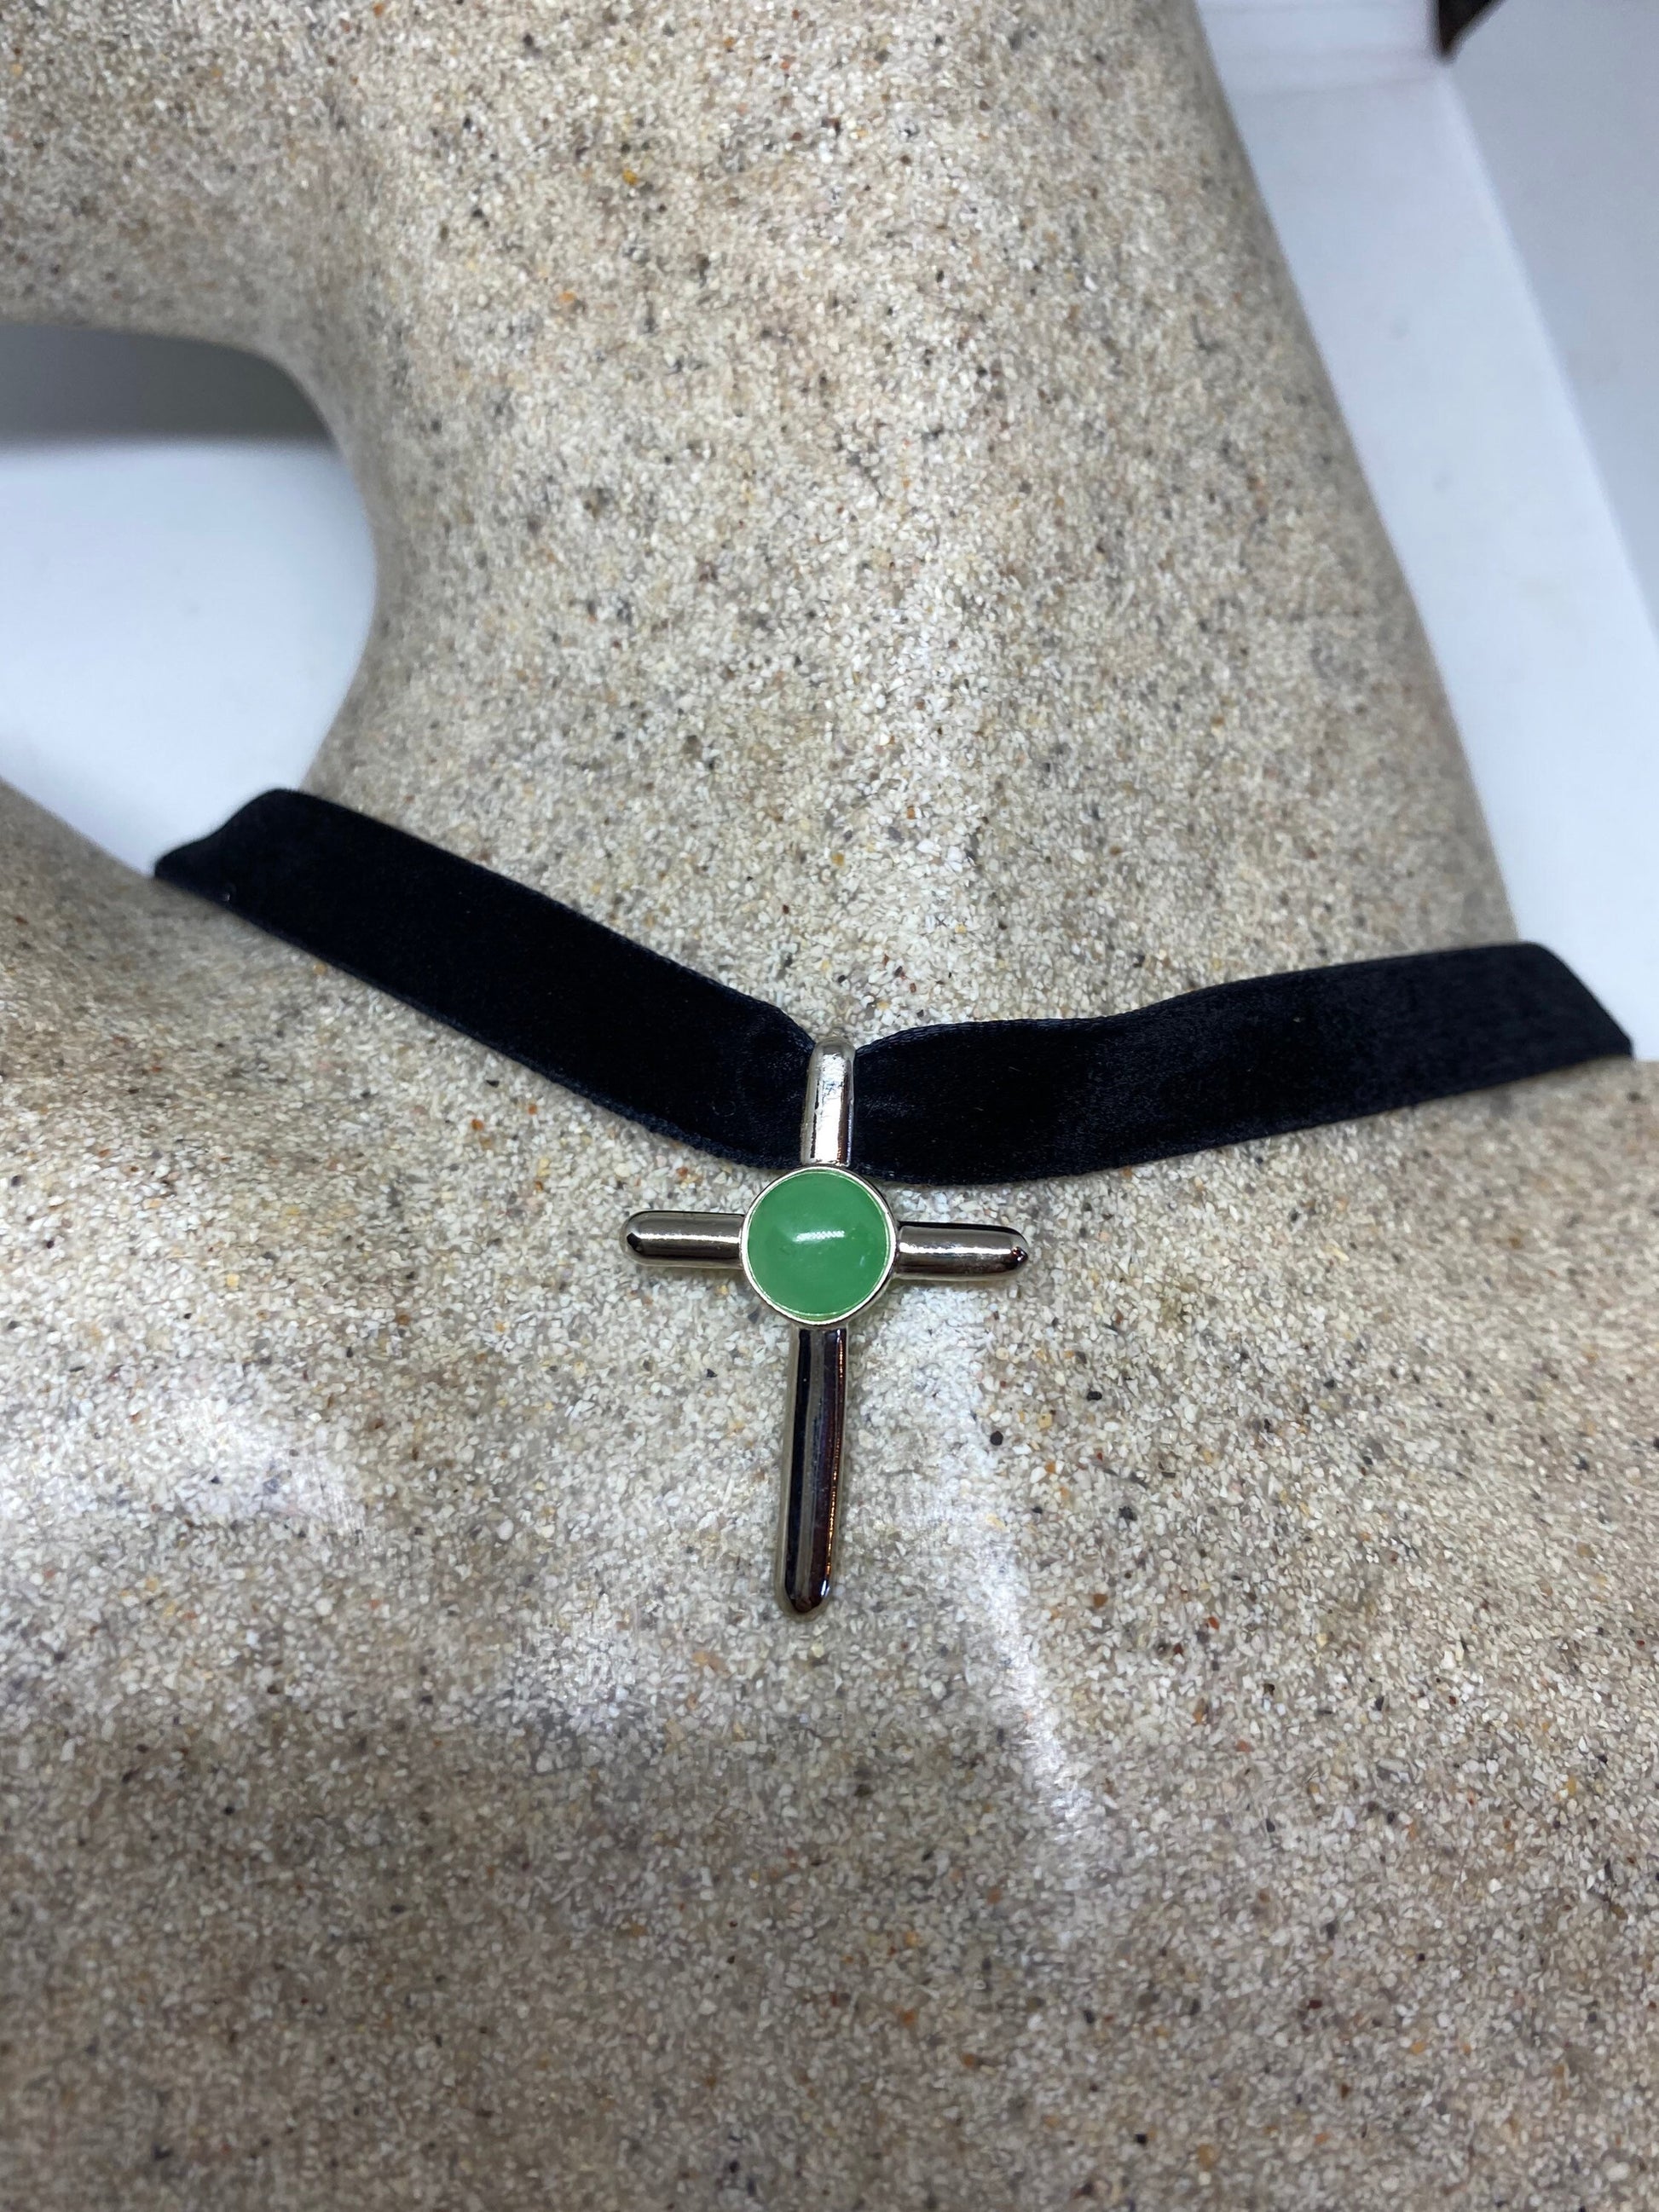 Vintage Fun Jade Choker 925 Sterling Silver Cross Pendant Necklace